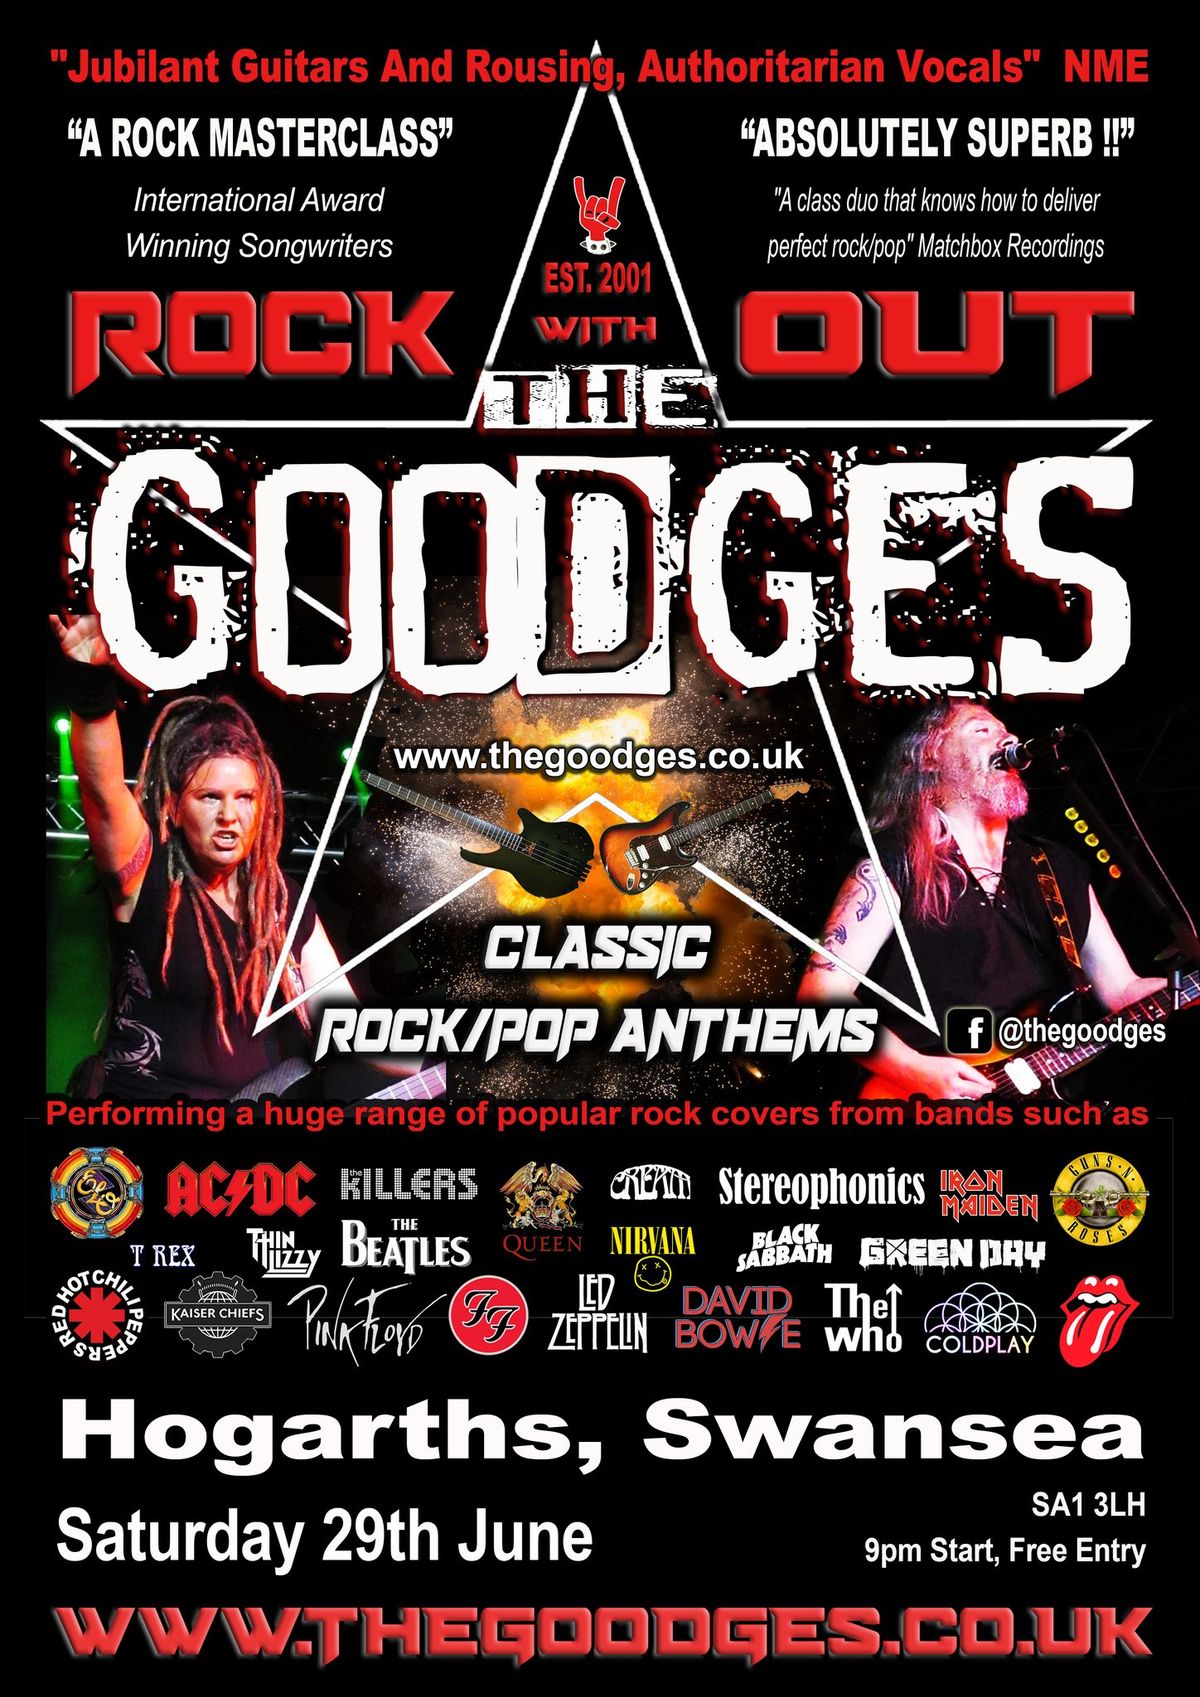 The Goodges Rock Out Live @ Hogarths, Swansea. SA1 3LH. 9pm Start.